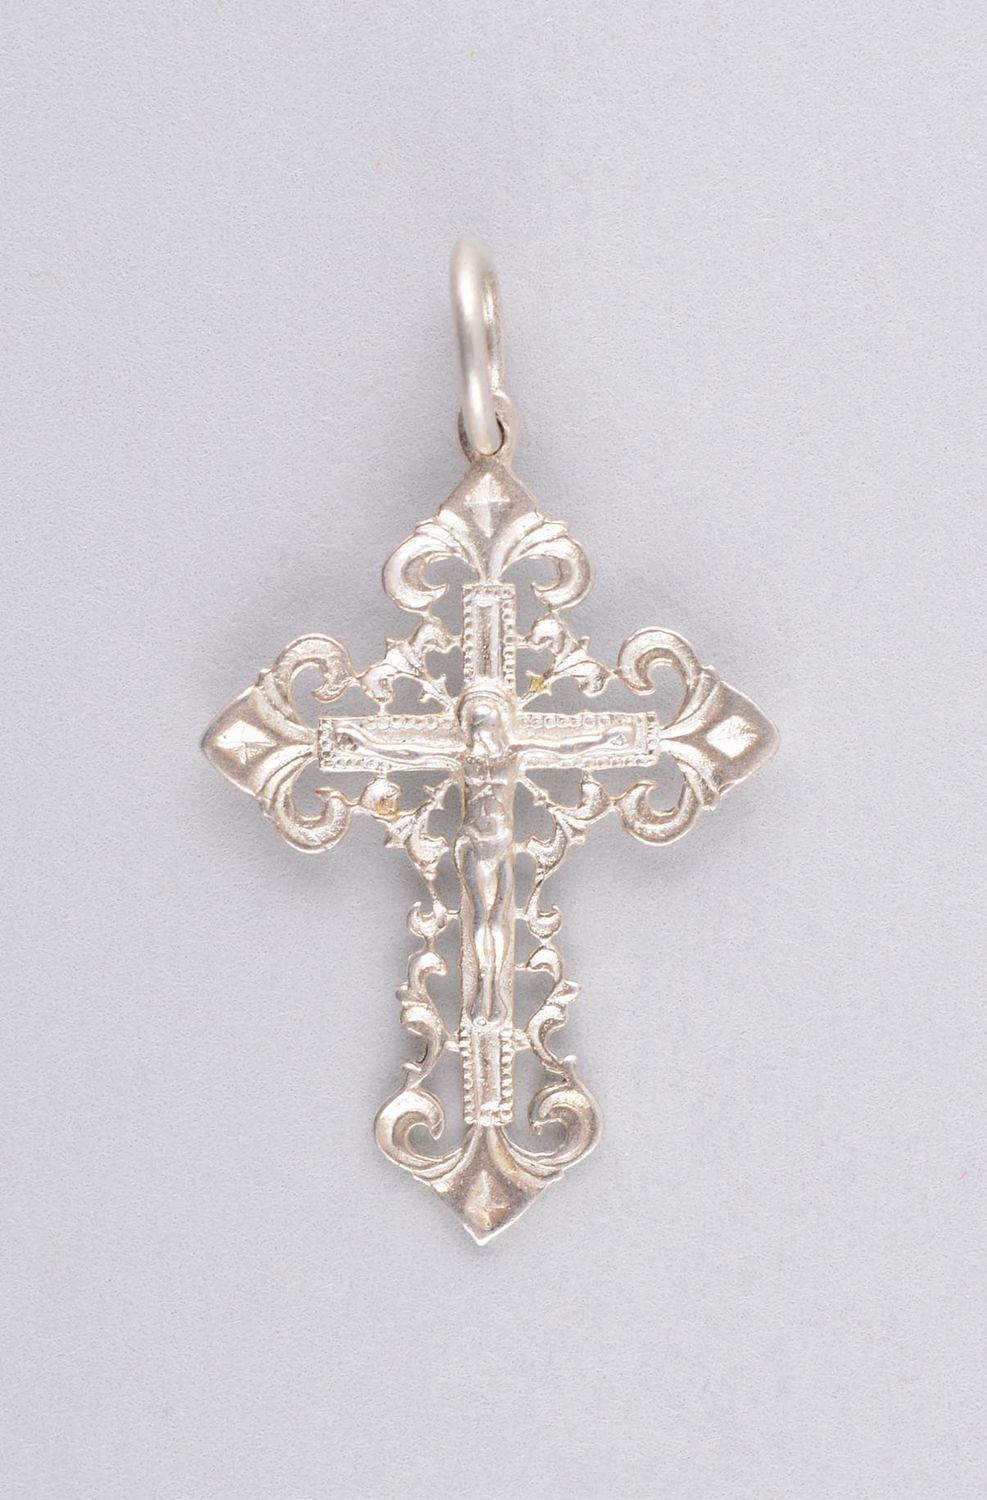 Handmade cross necklace bronze cross pendant necklace designer accessories photo 4